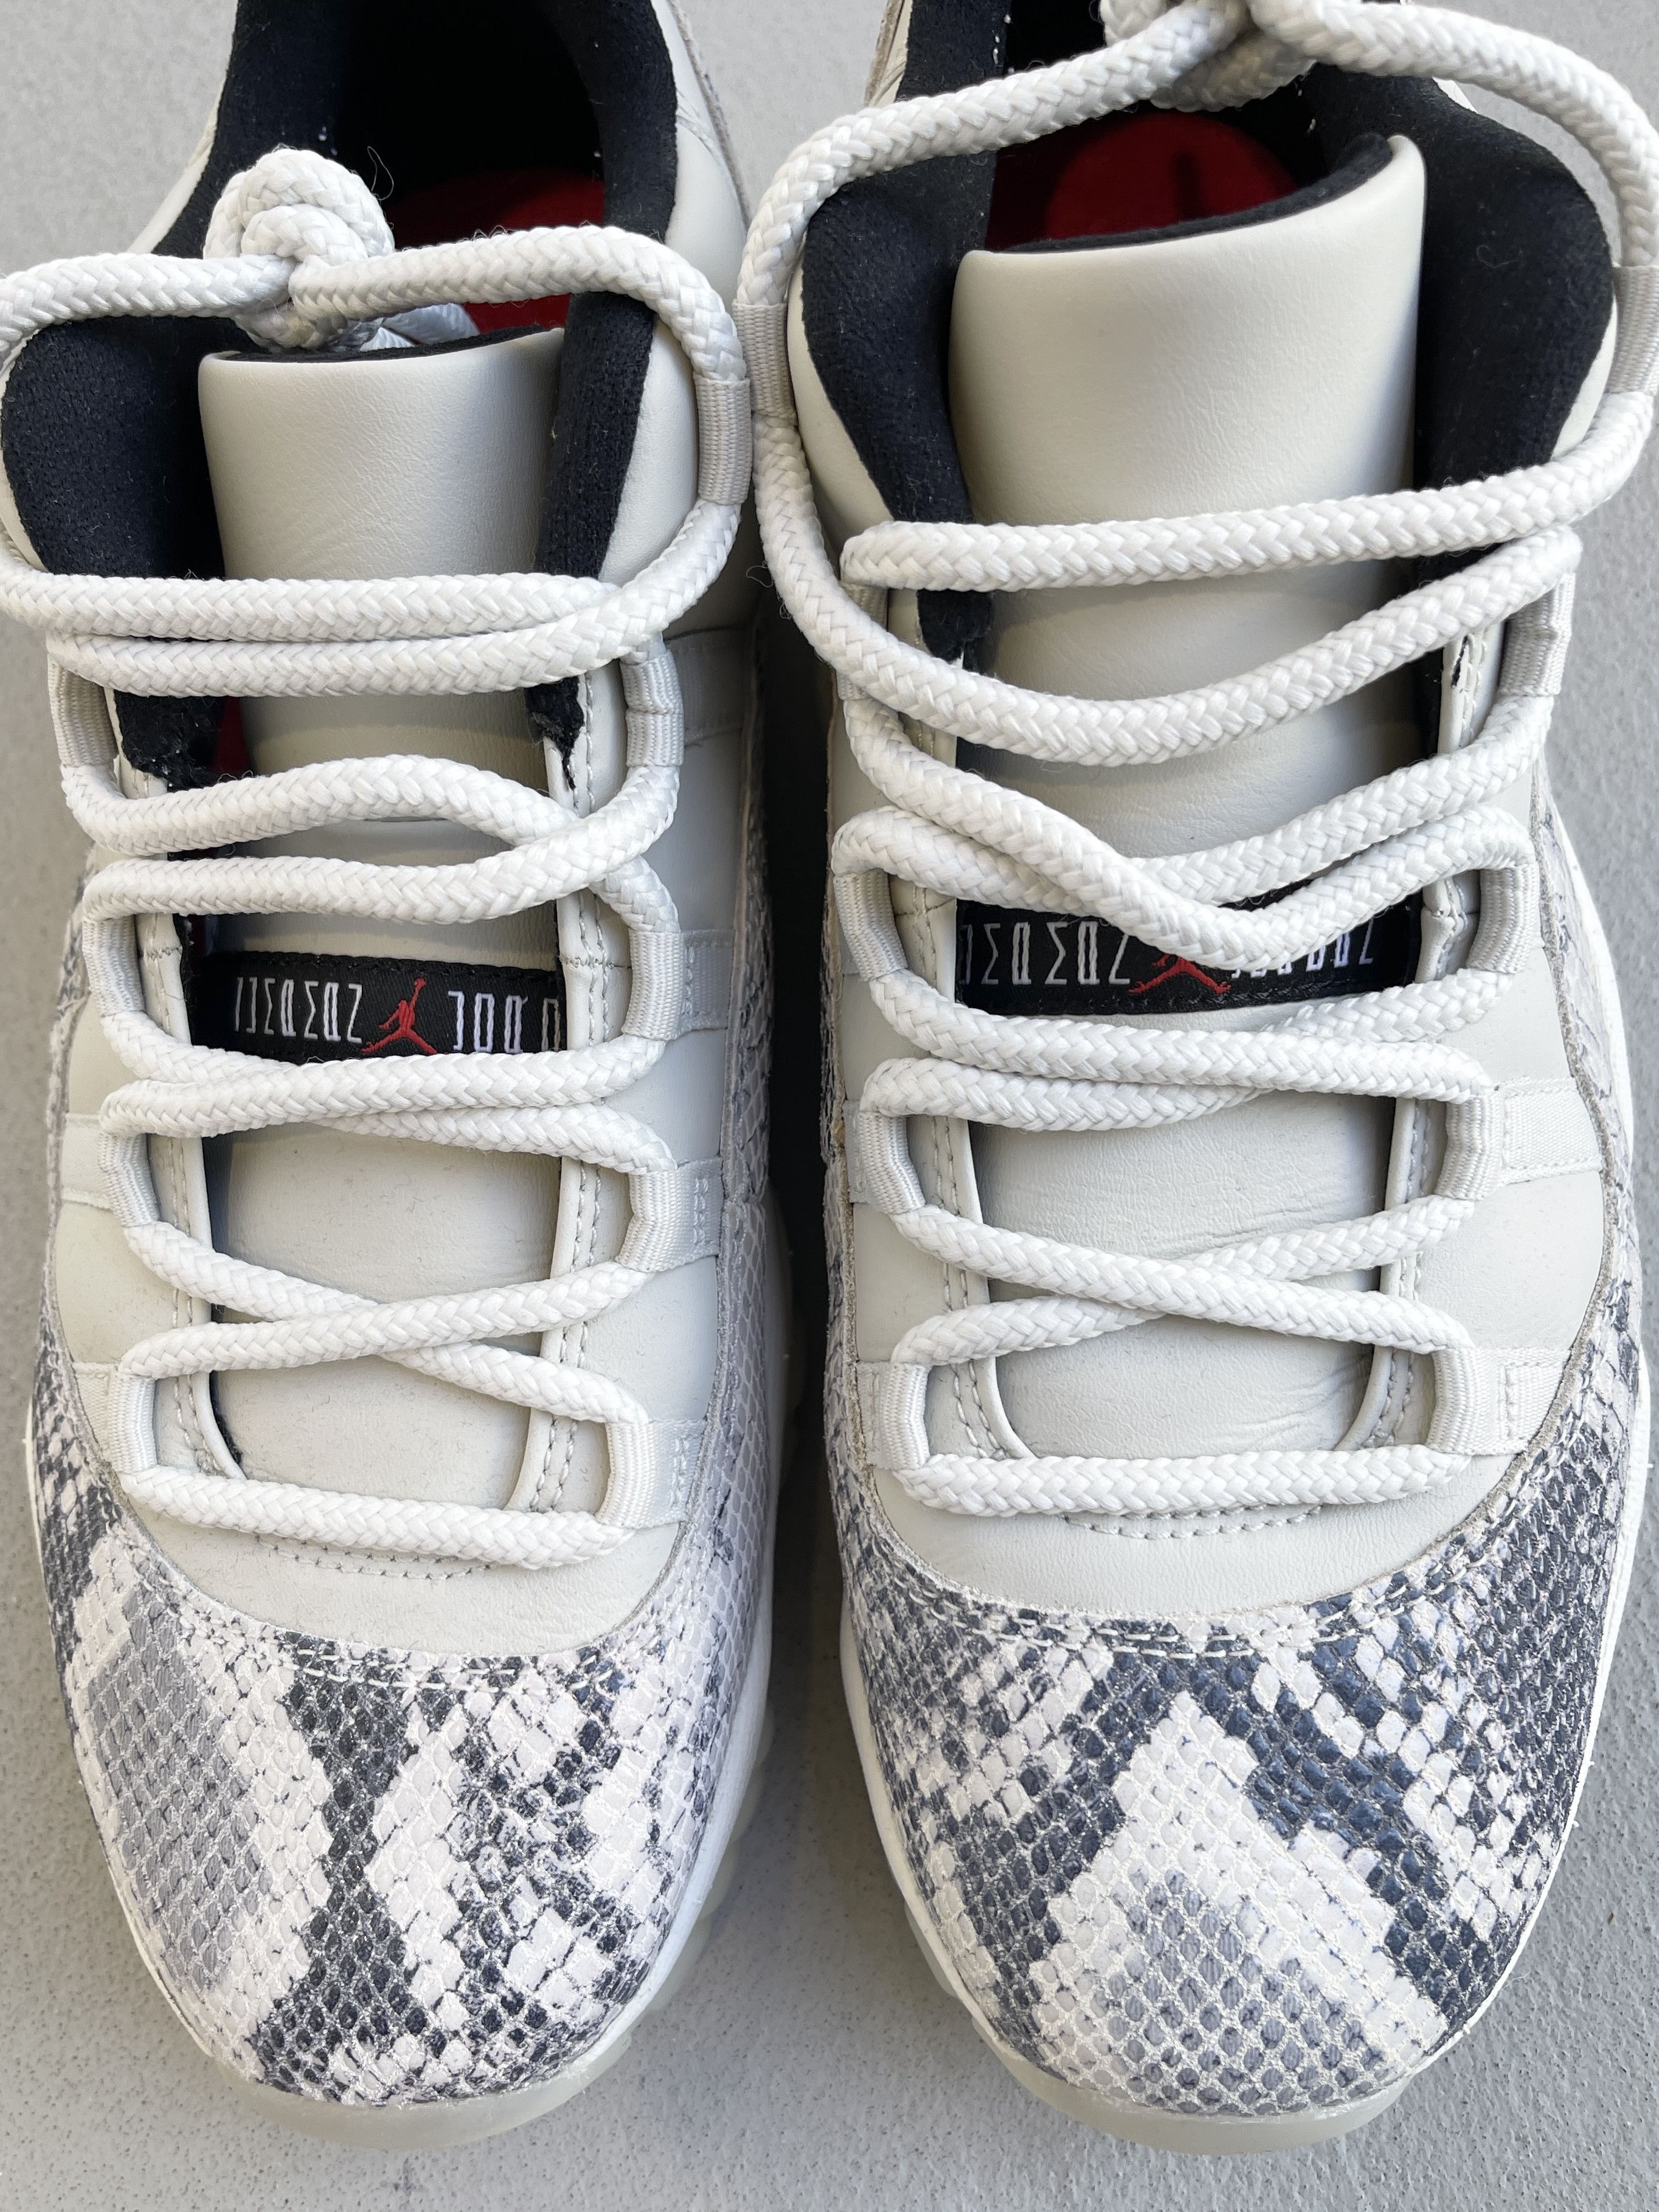 🔥 Nike Air Jordan 11 Retro Low Snake Light Bone 2019 - 6